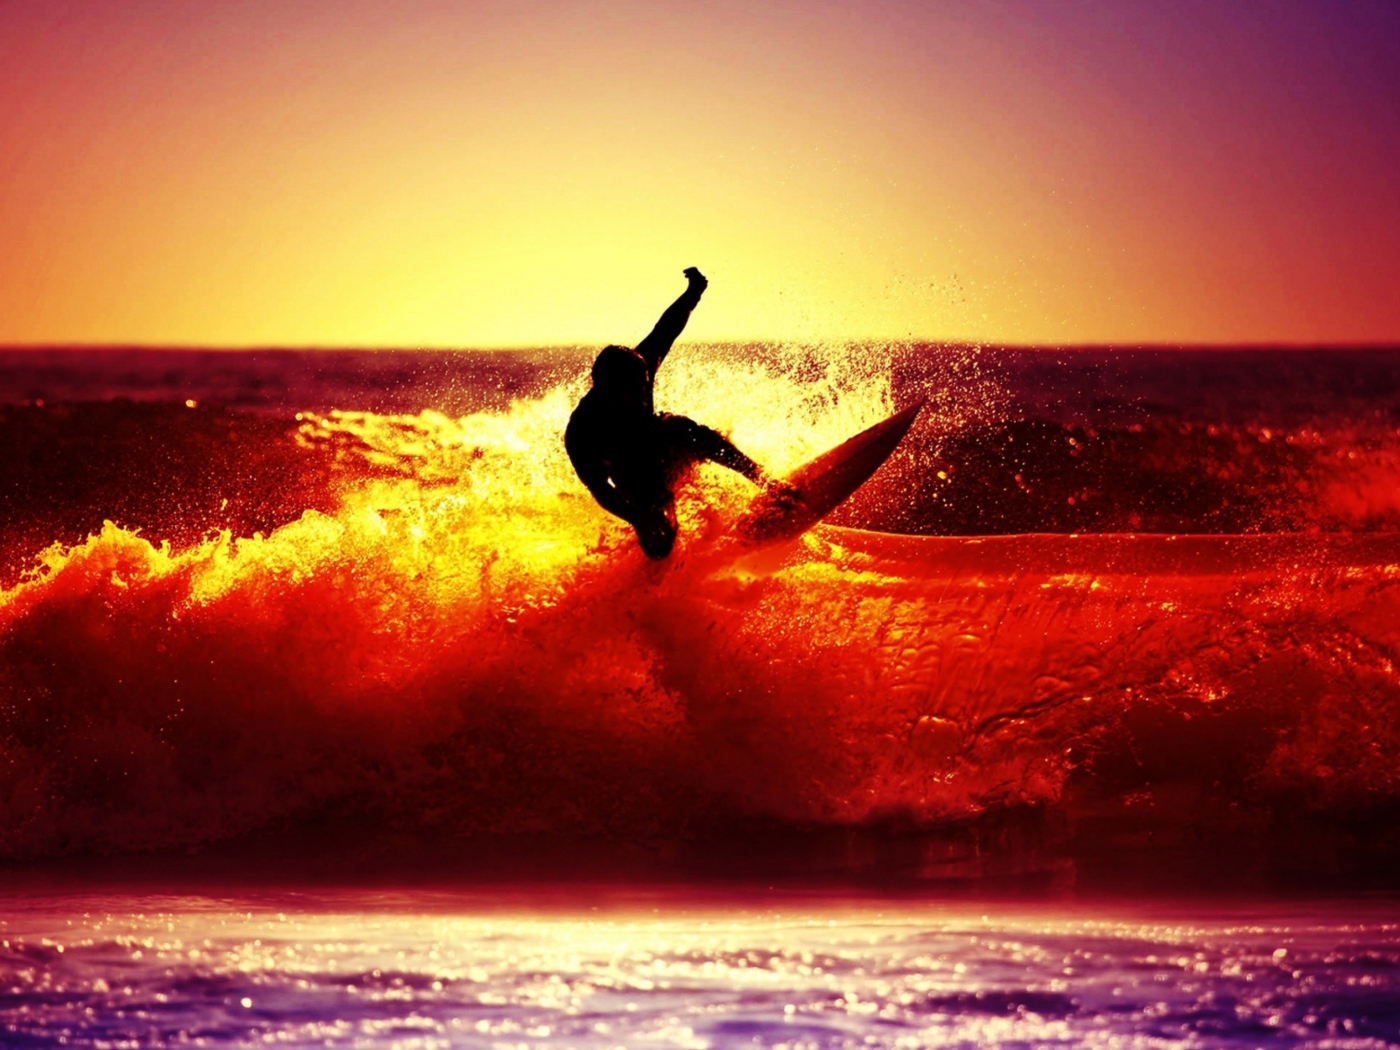 Обои Surfing At Sunset 1400x1050